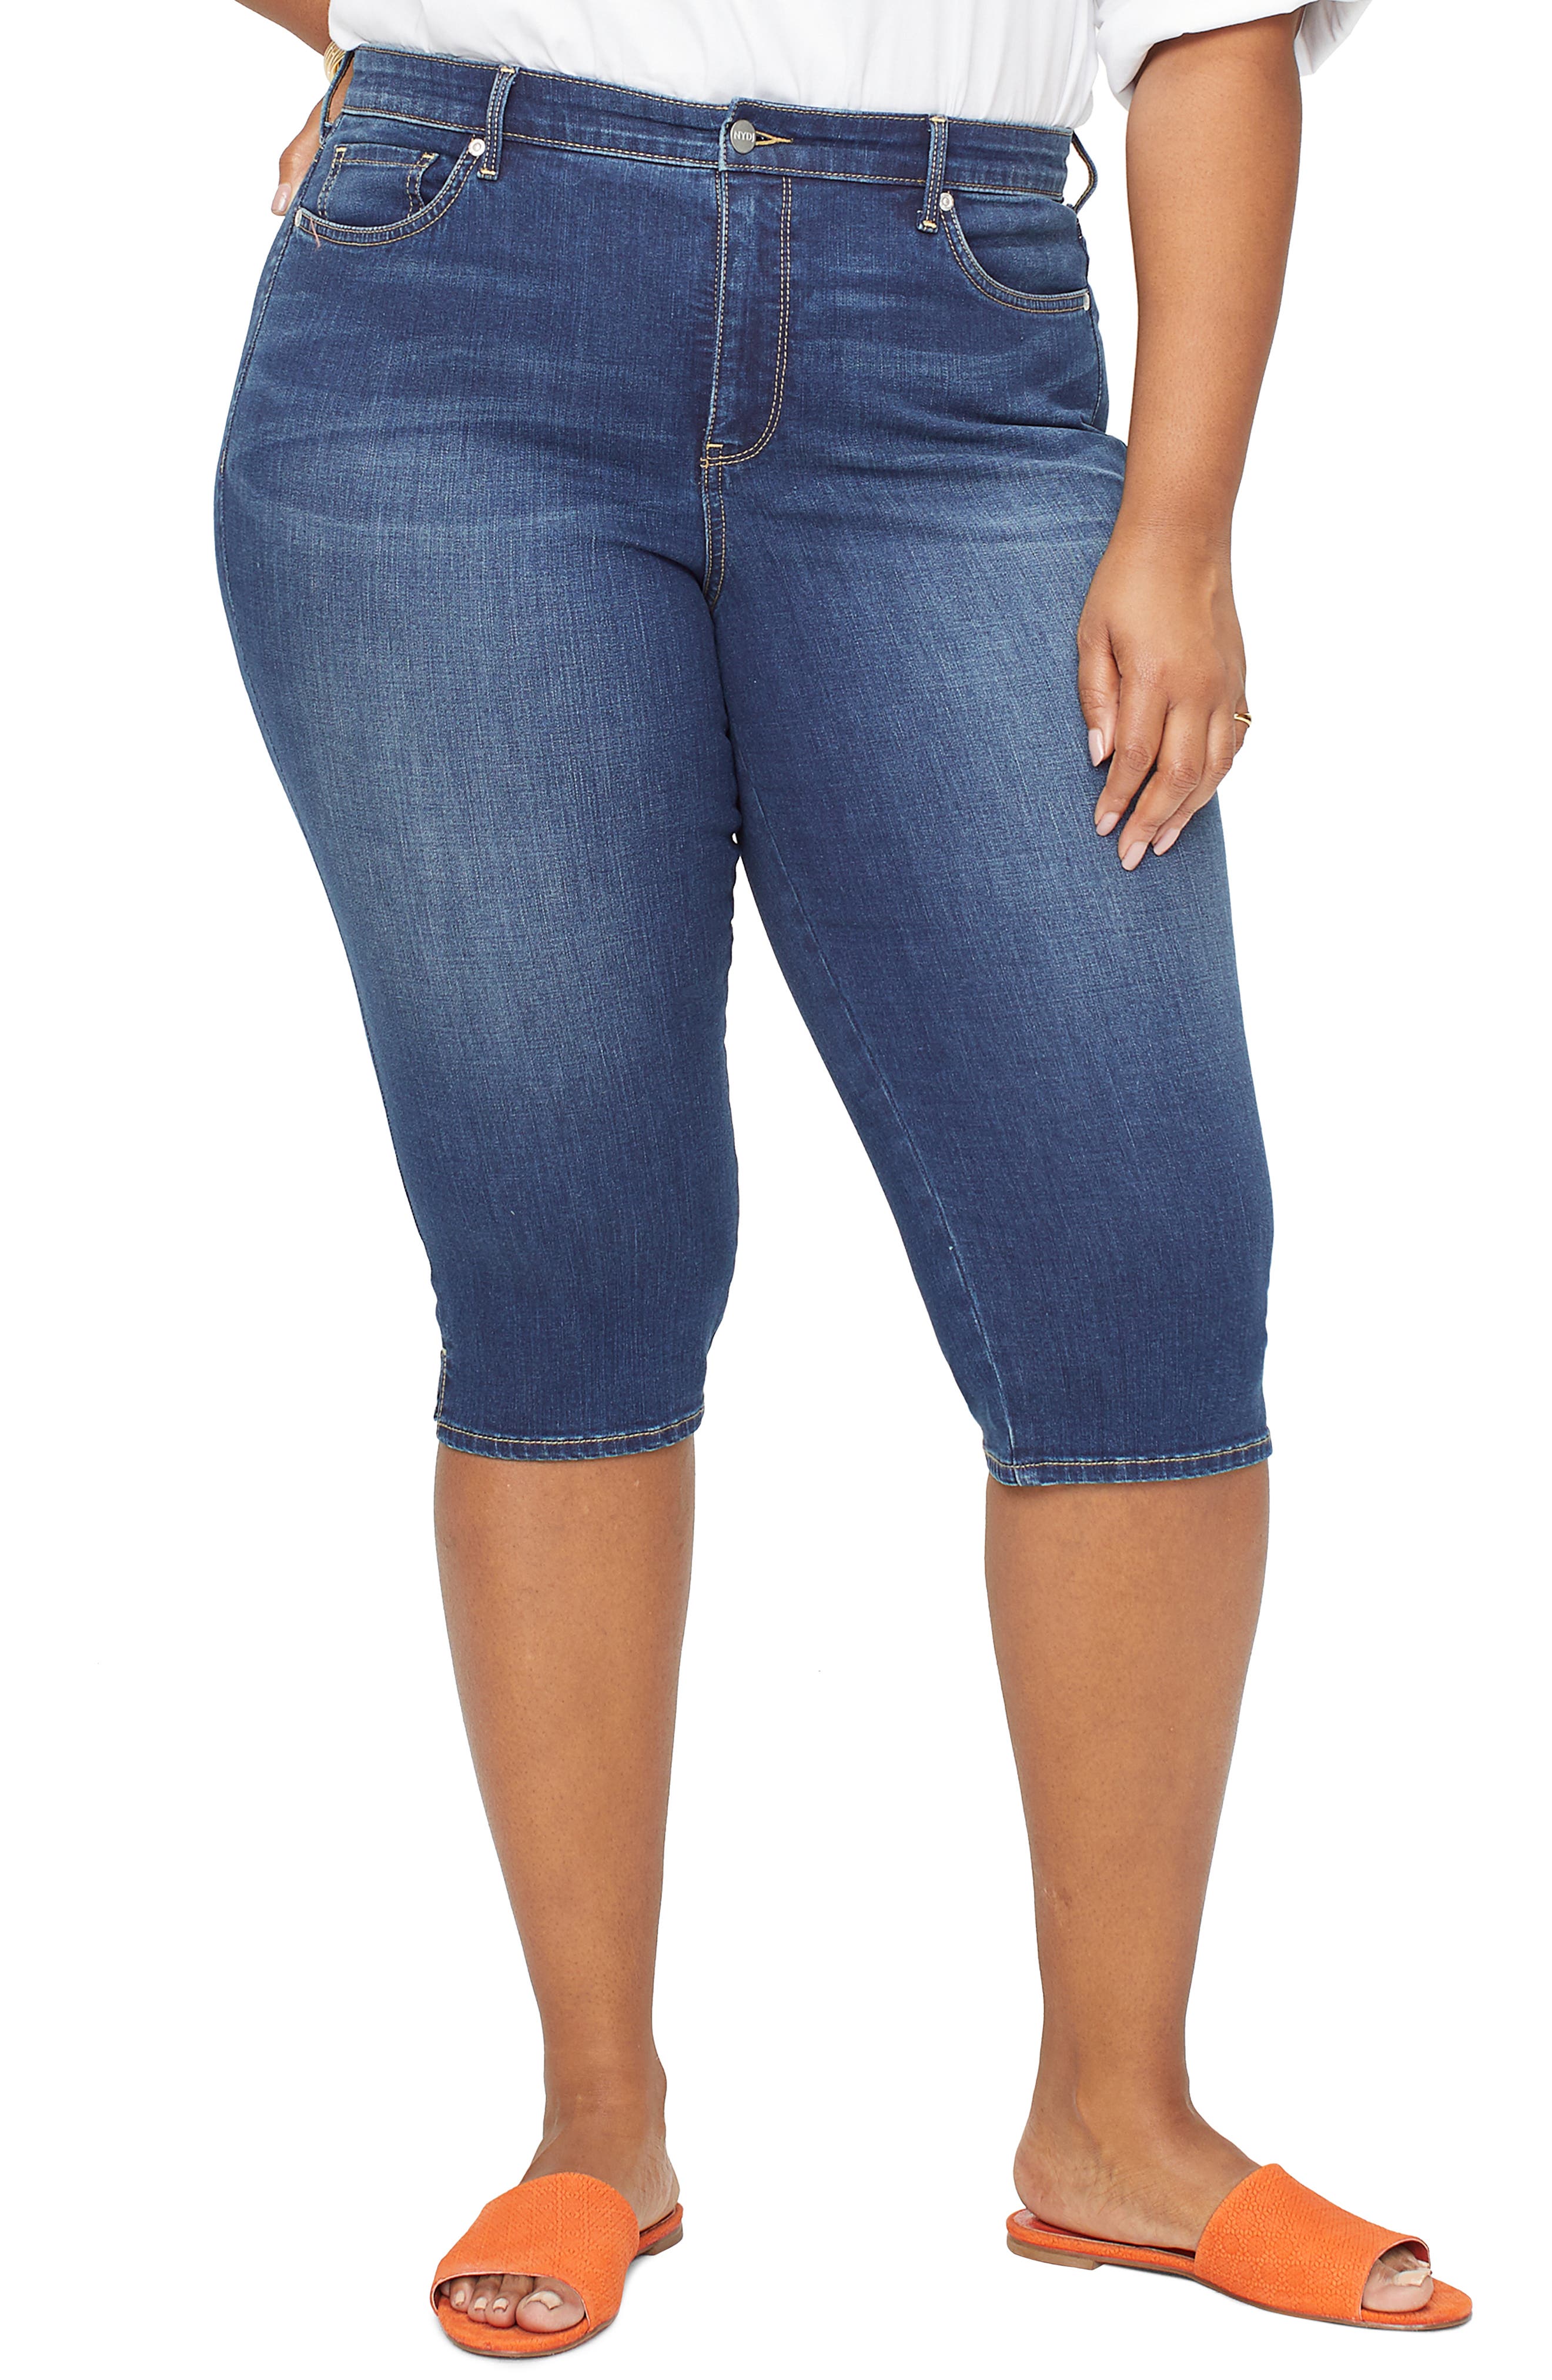 NYDJ Womens Plus Size Capri Jeans